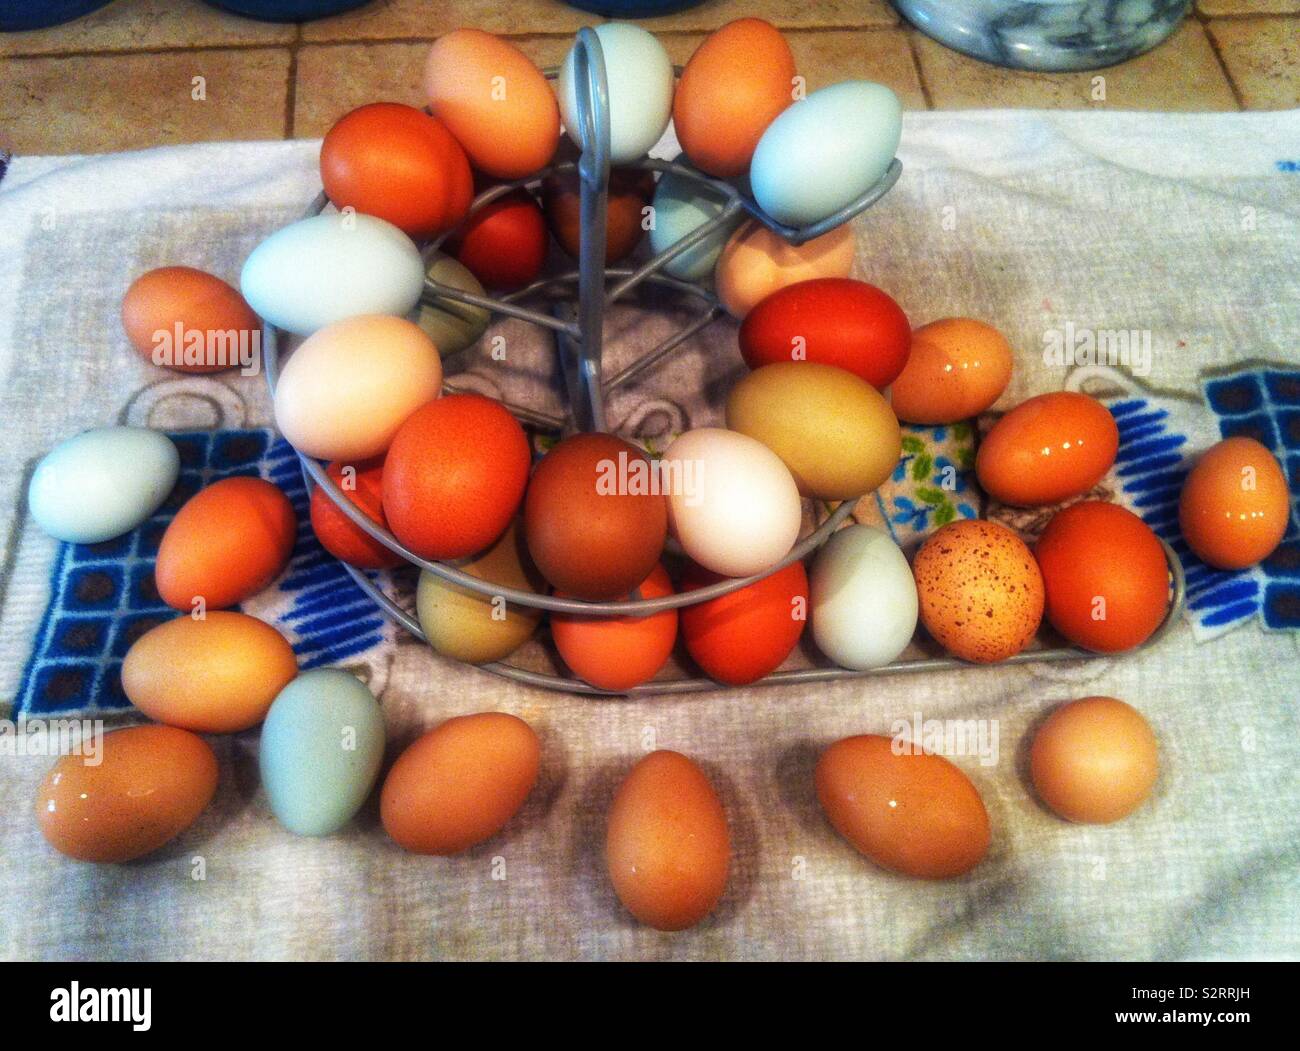 Spiral egg skelter Stock Photo - Alamy